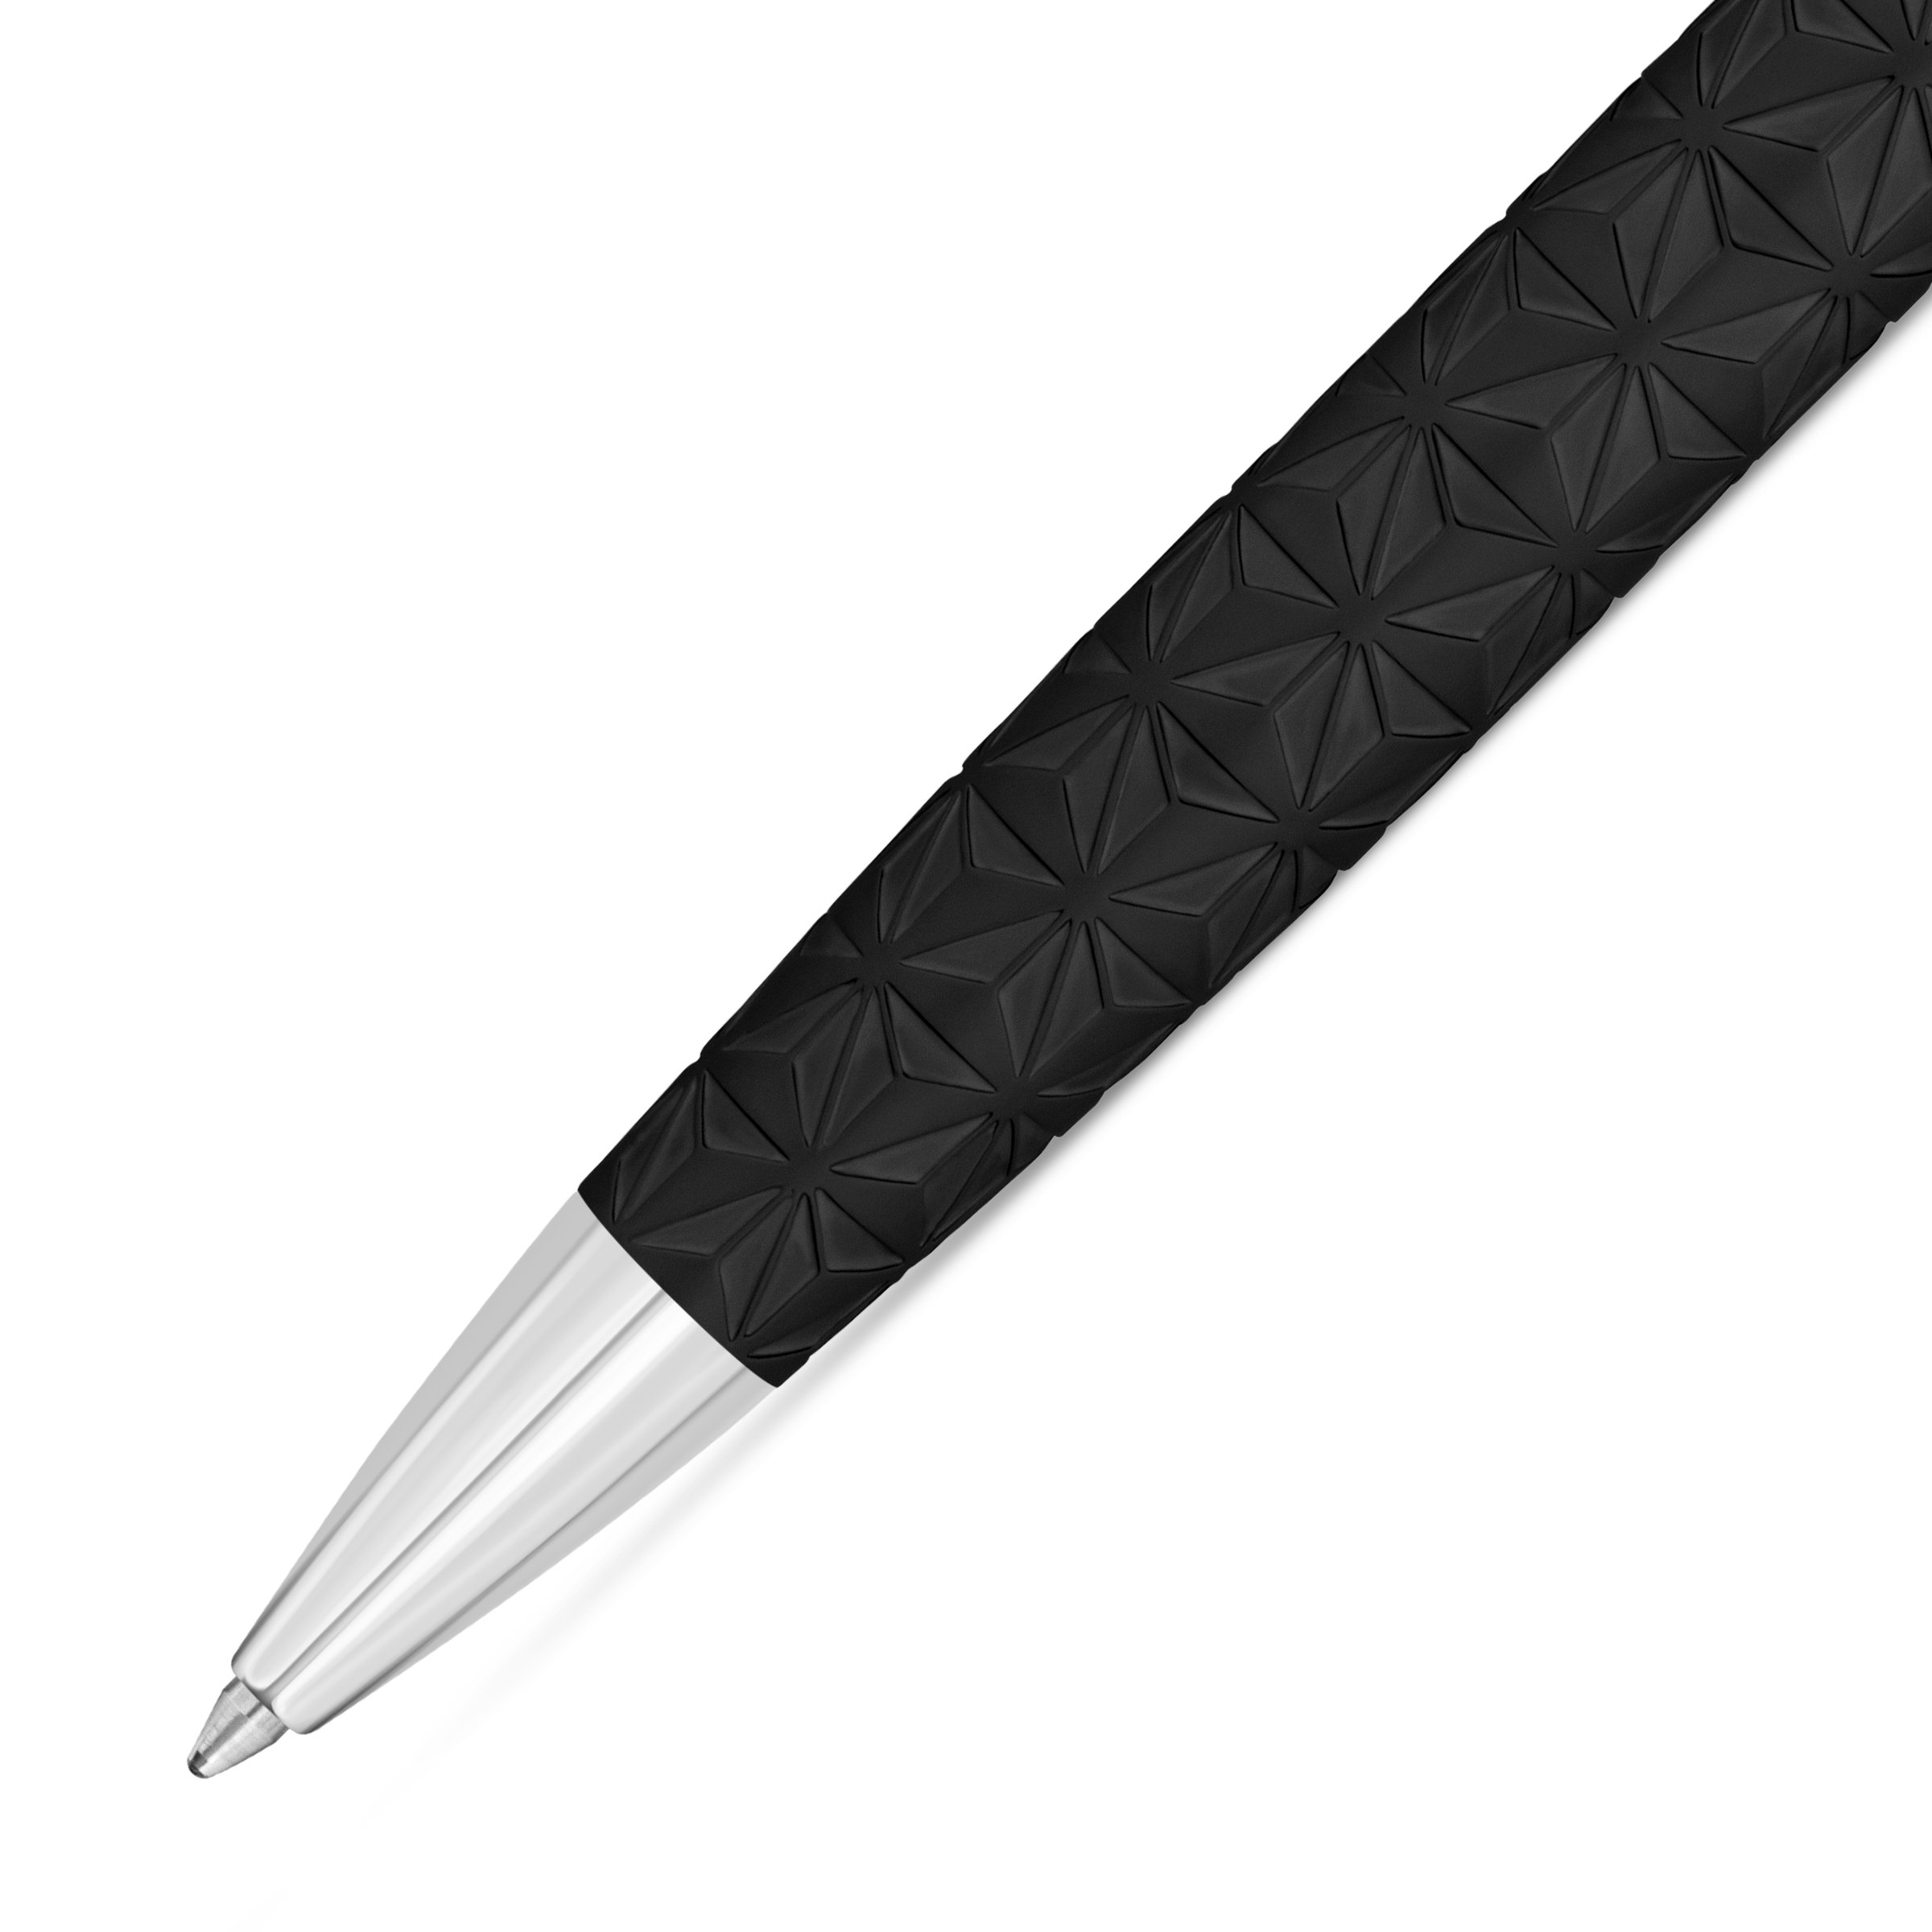 POLICE - Ethno Pen For Men Black & Silver Color - PERGR0001301 2